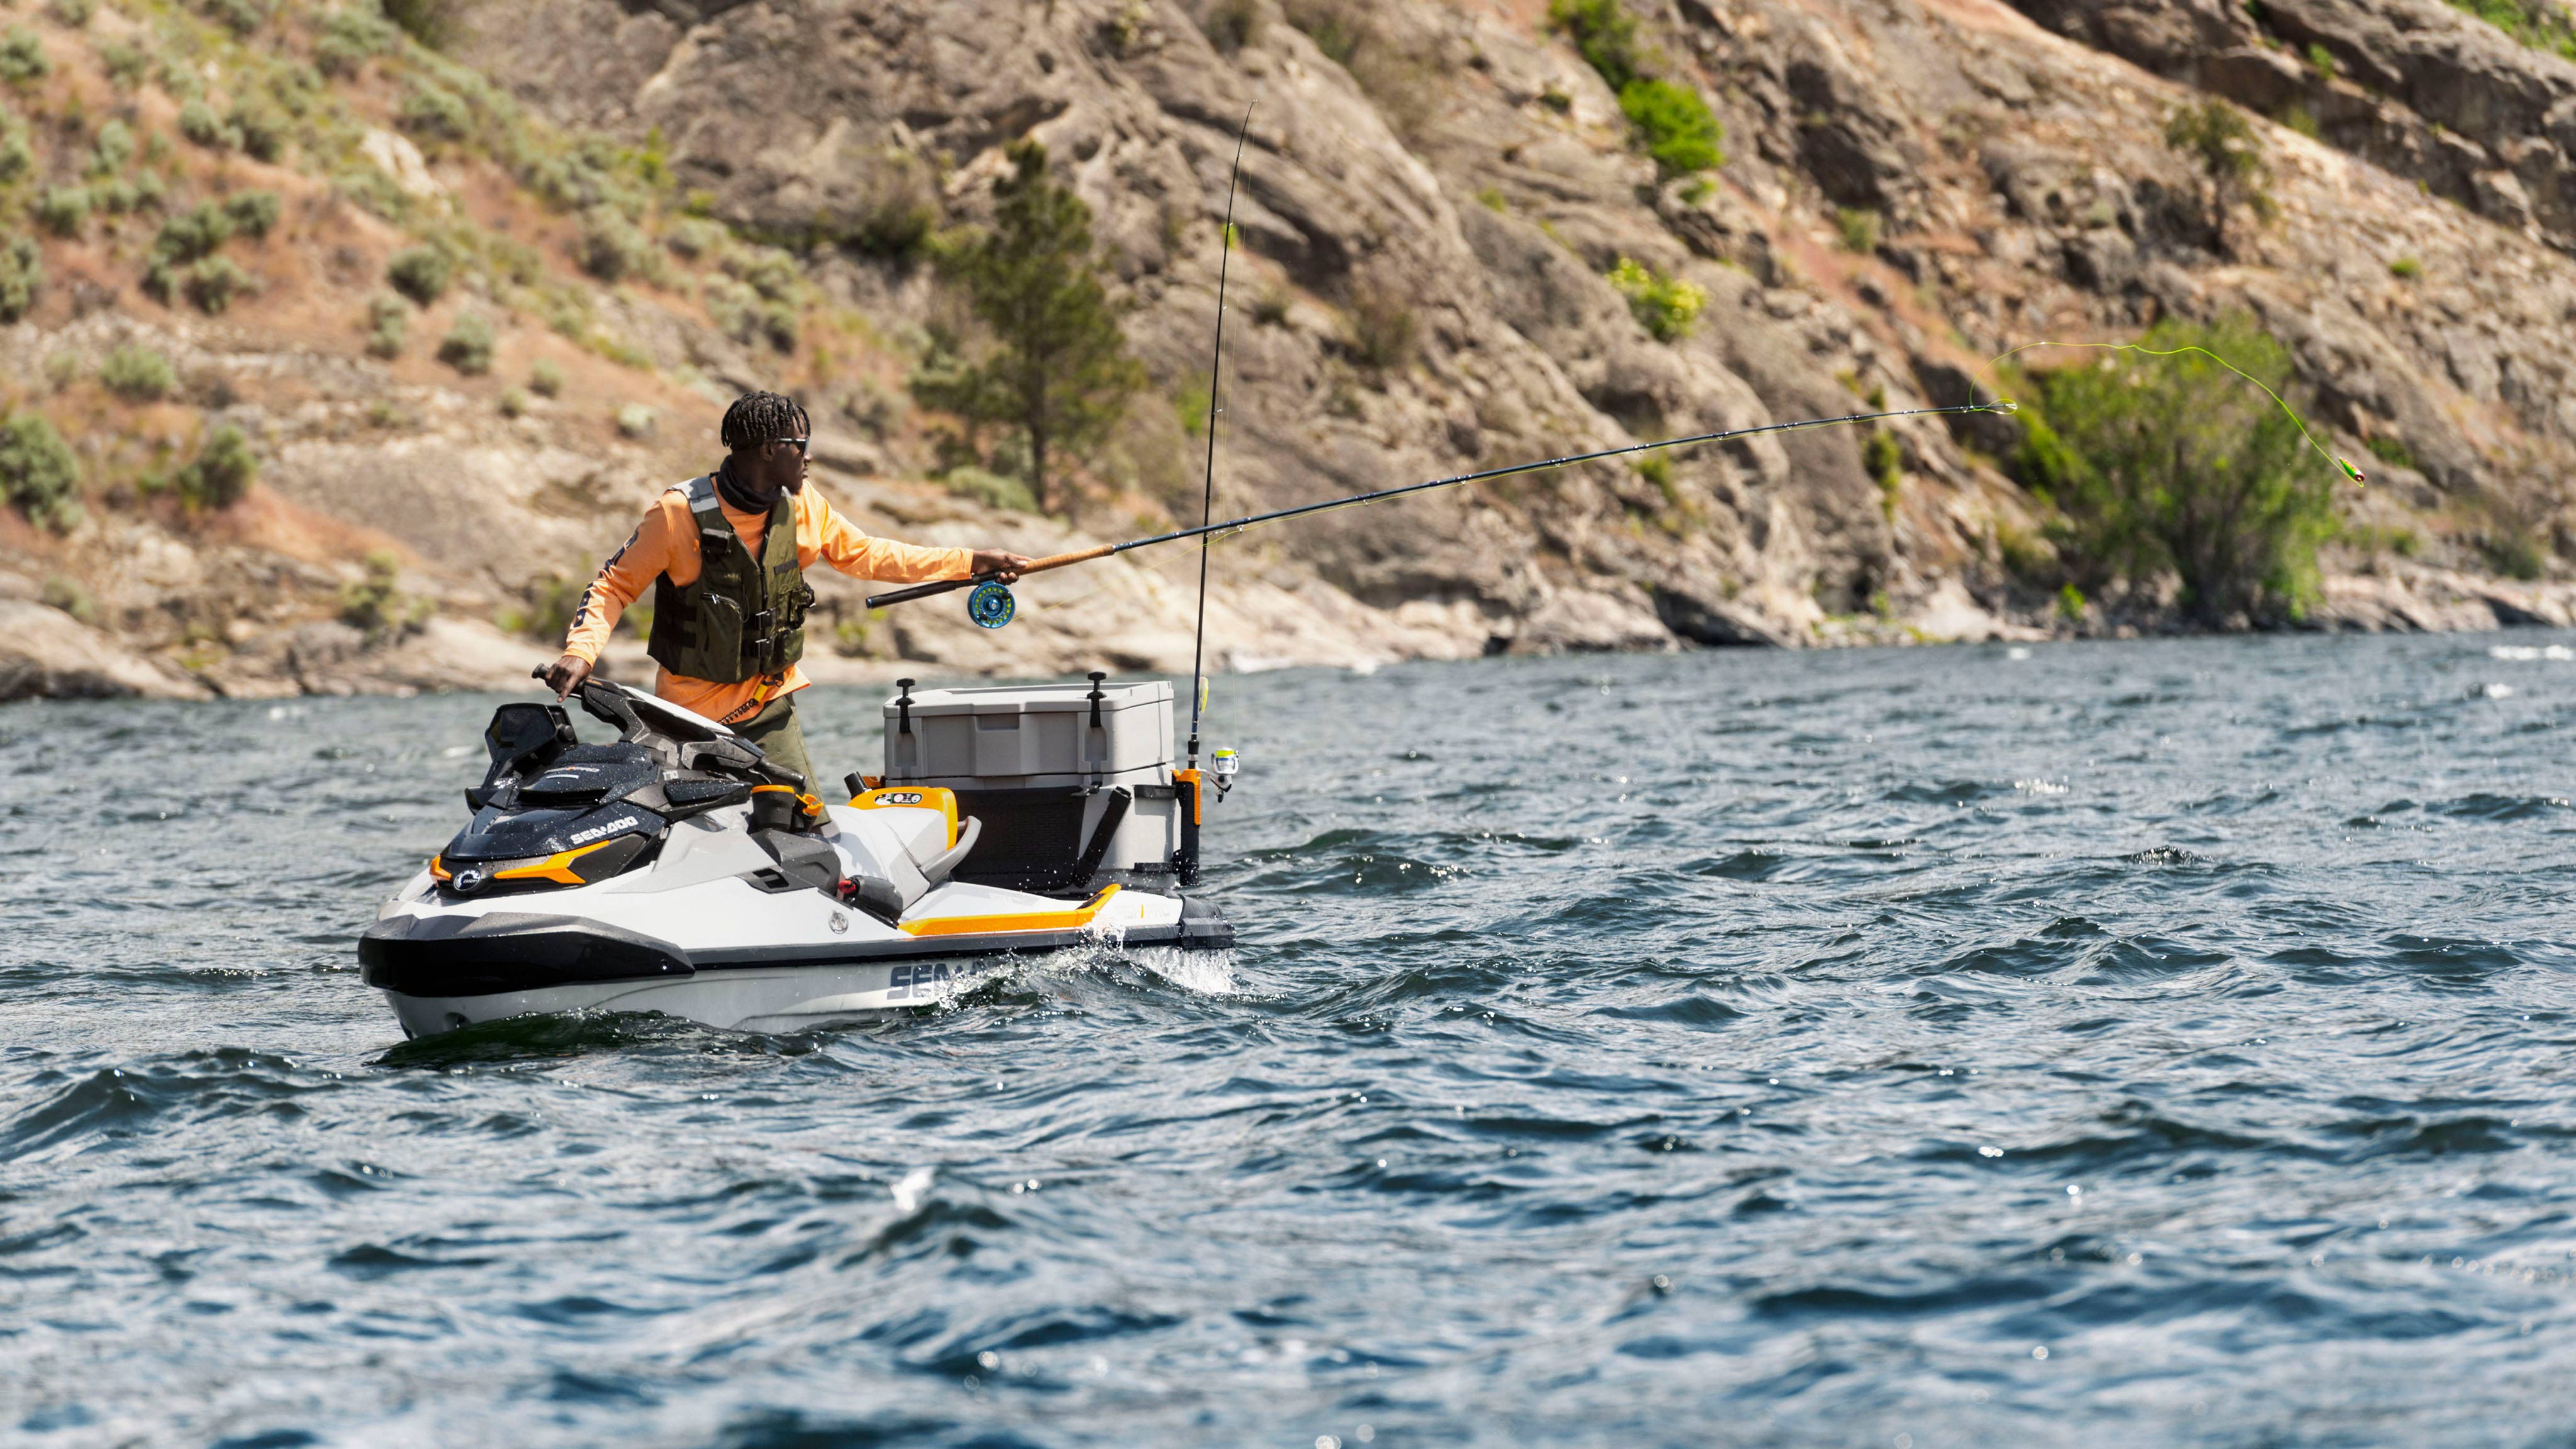 Emmanuel Williams a pescar enquanto segurava o guiador do Troféu Sea-Doo FishPro